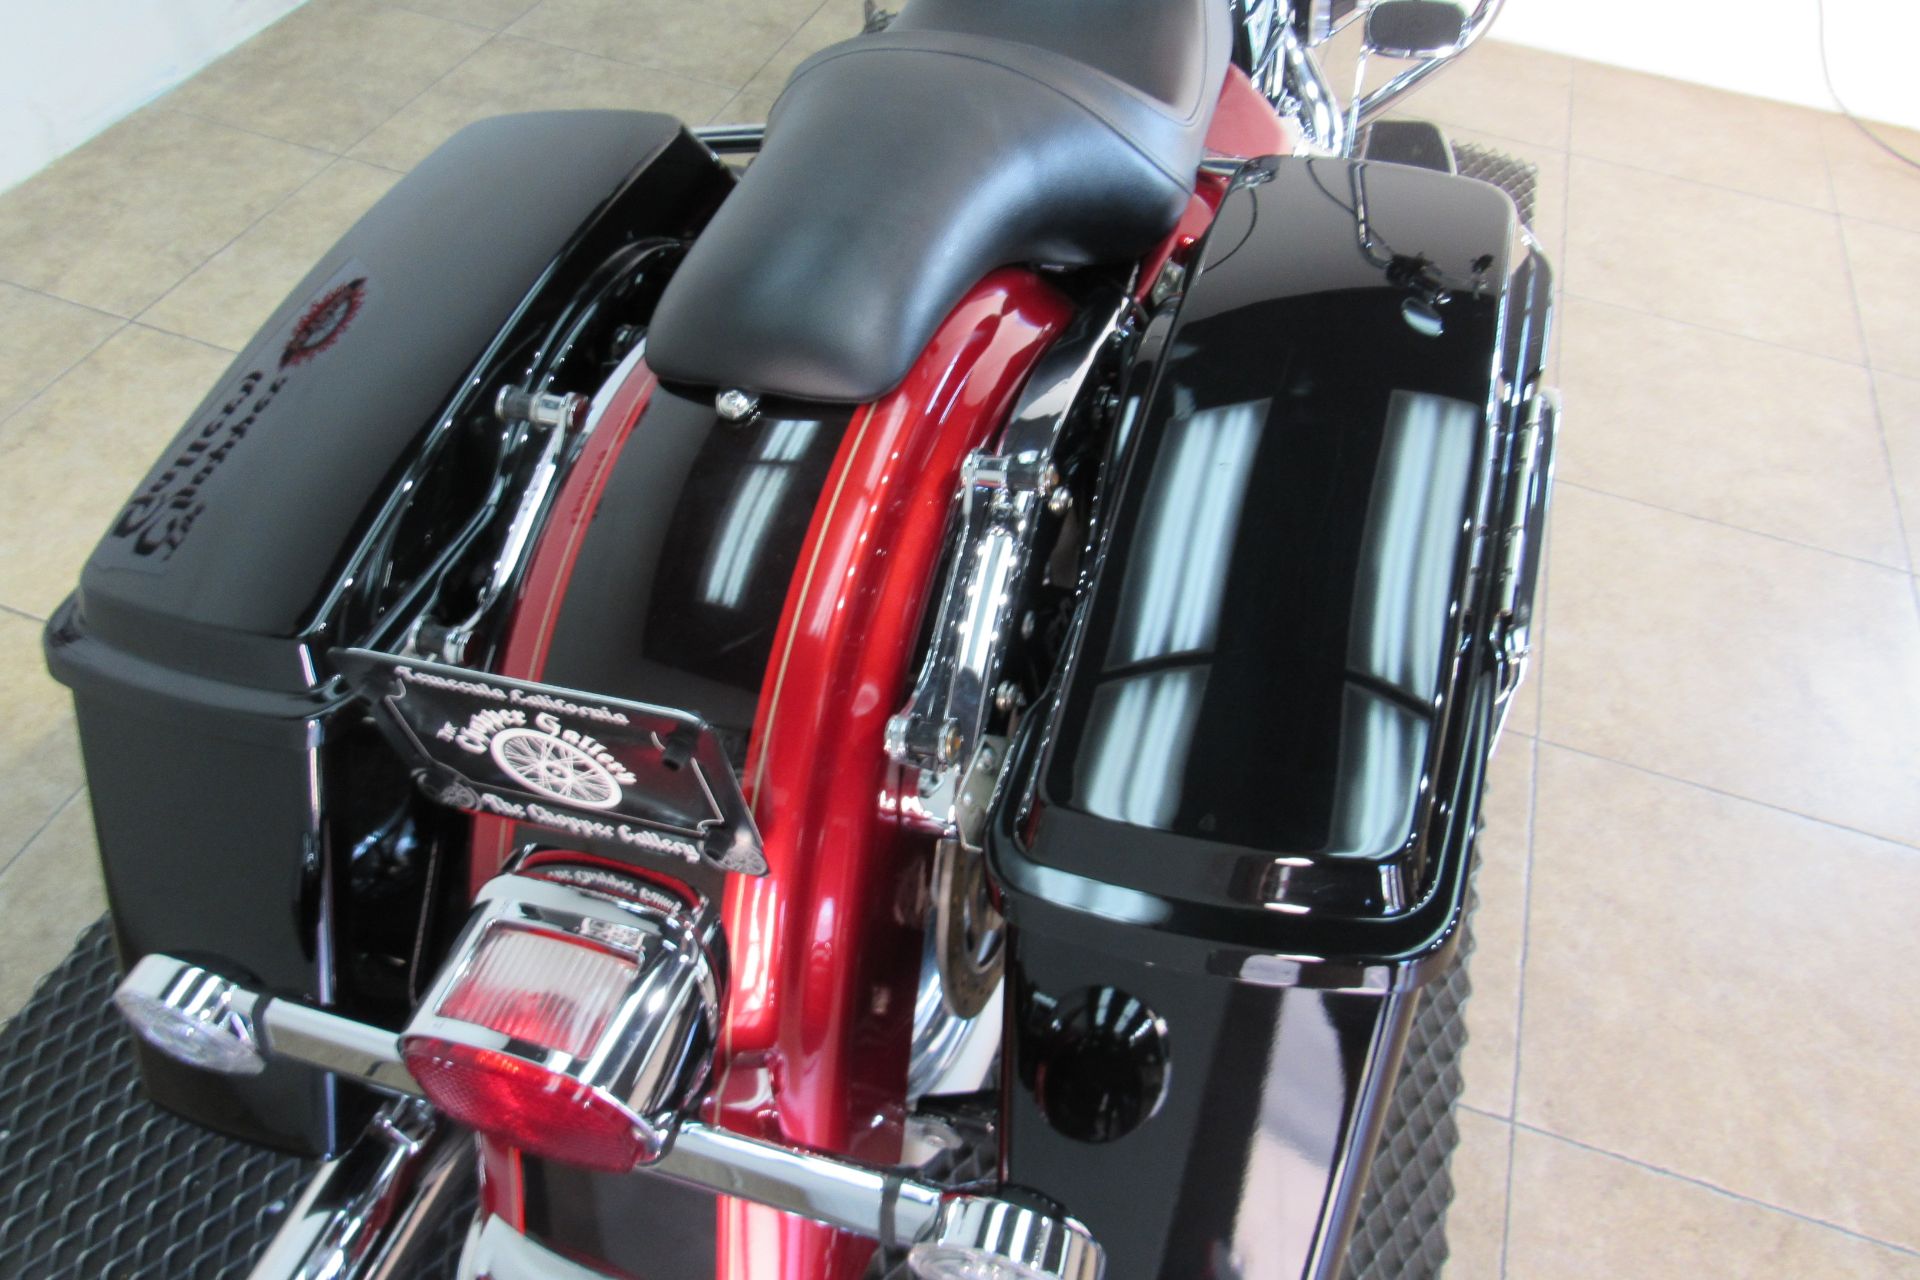 2013 Harley-Davidson Road King® Classic in Temecula, California - Photo 33